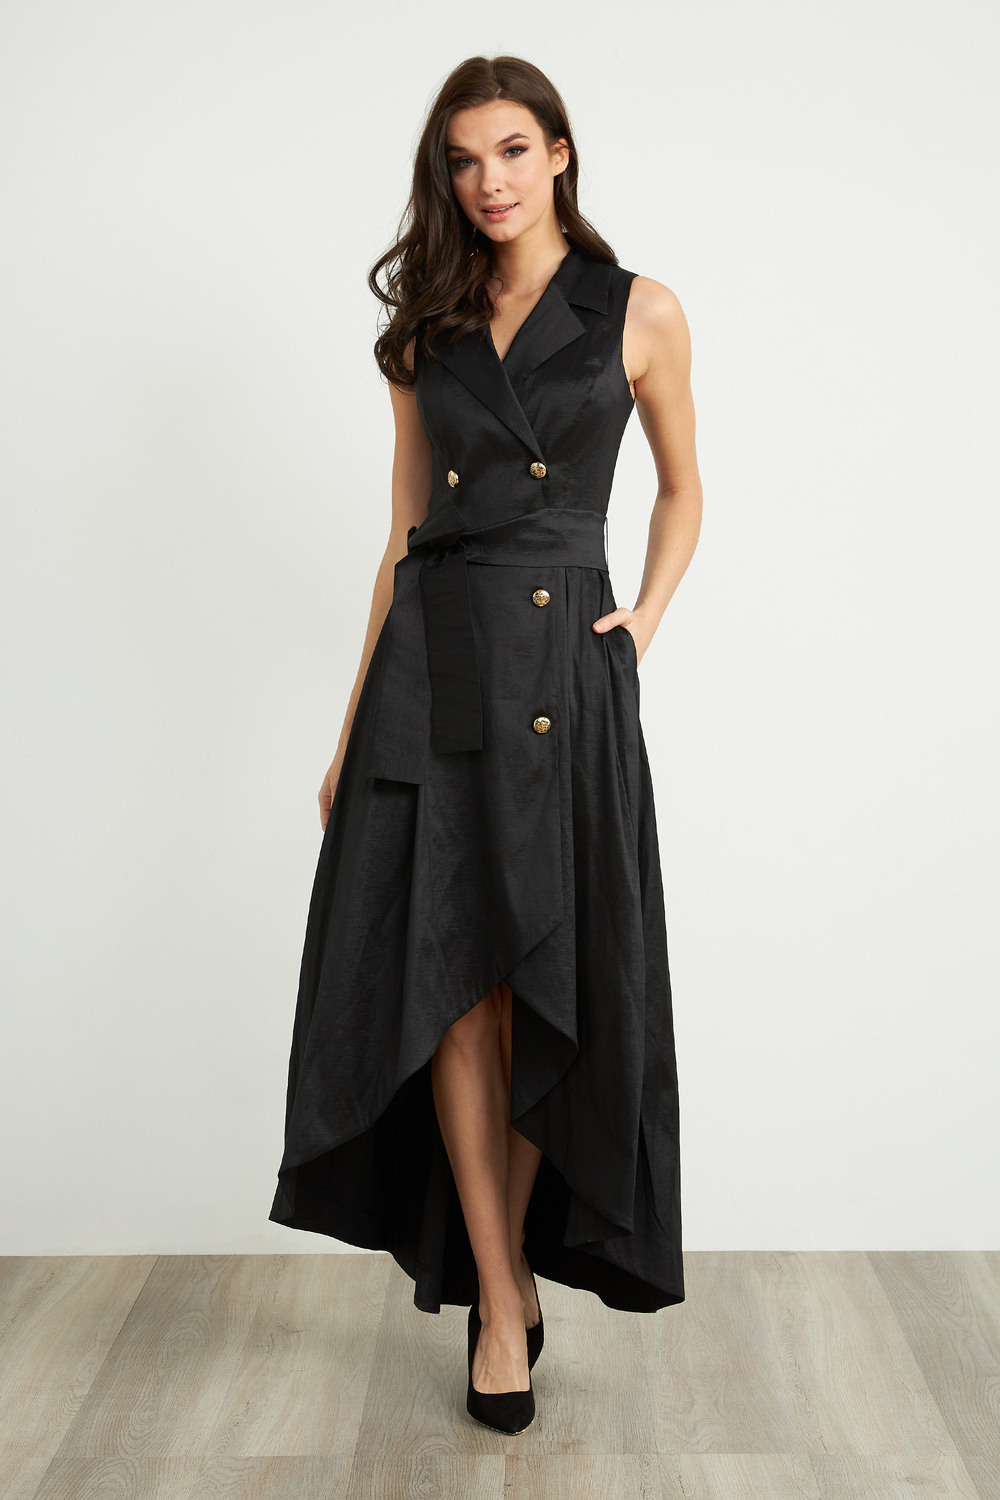 Joseph Ribkoff Dress Style 203357. Black